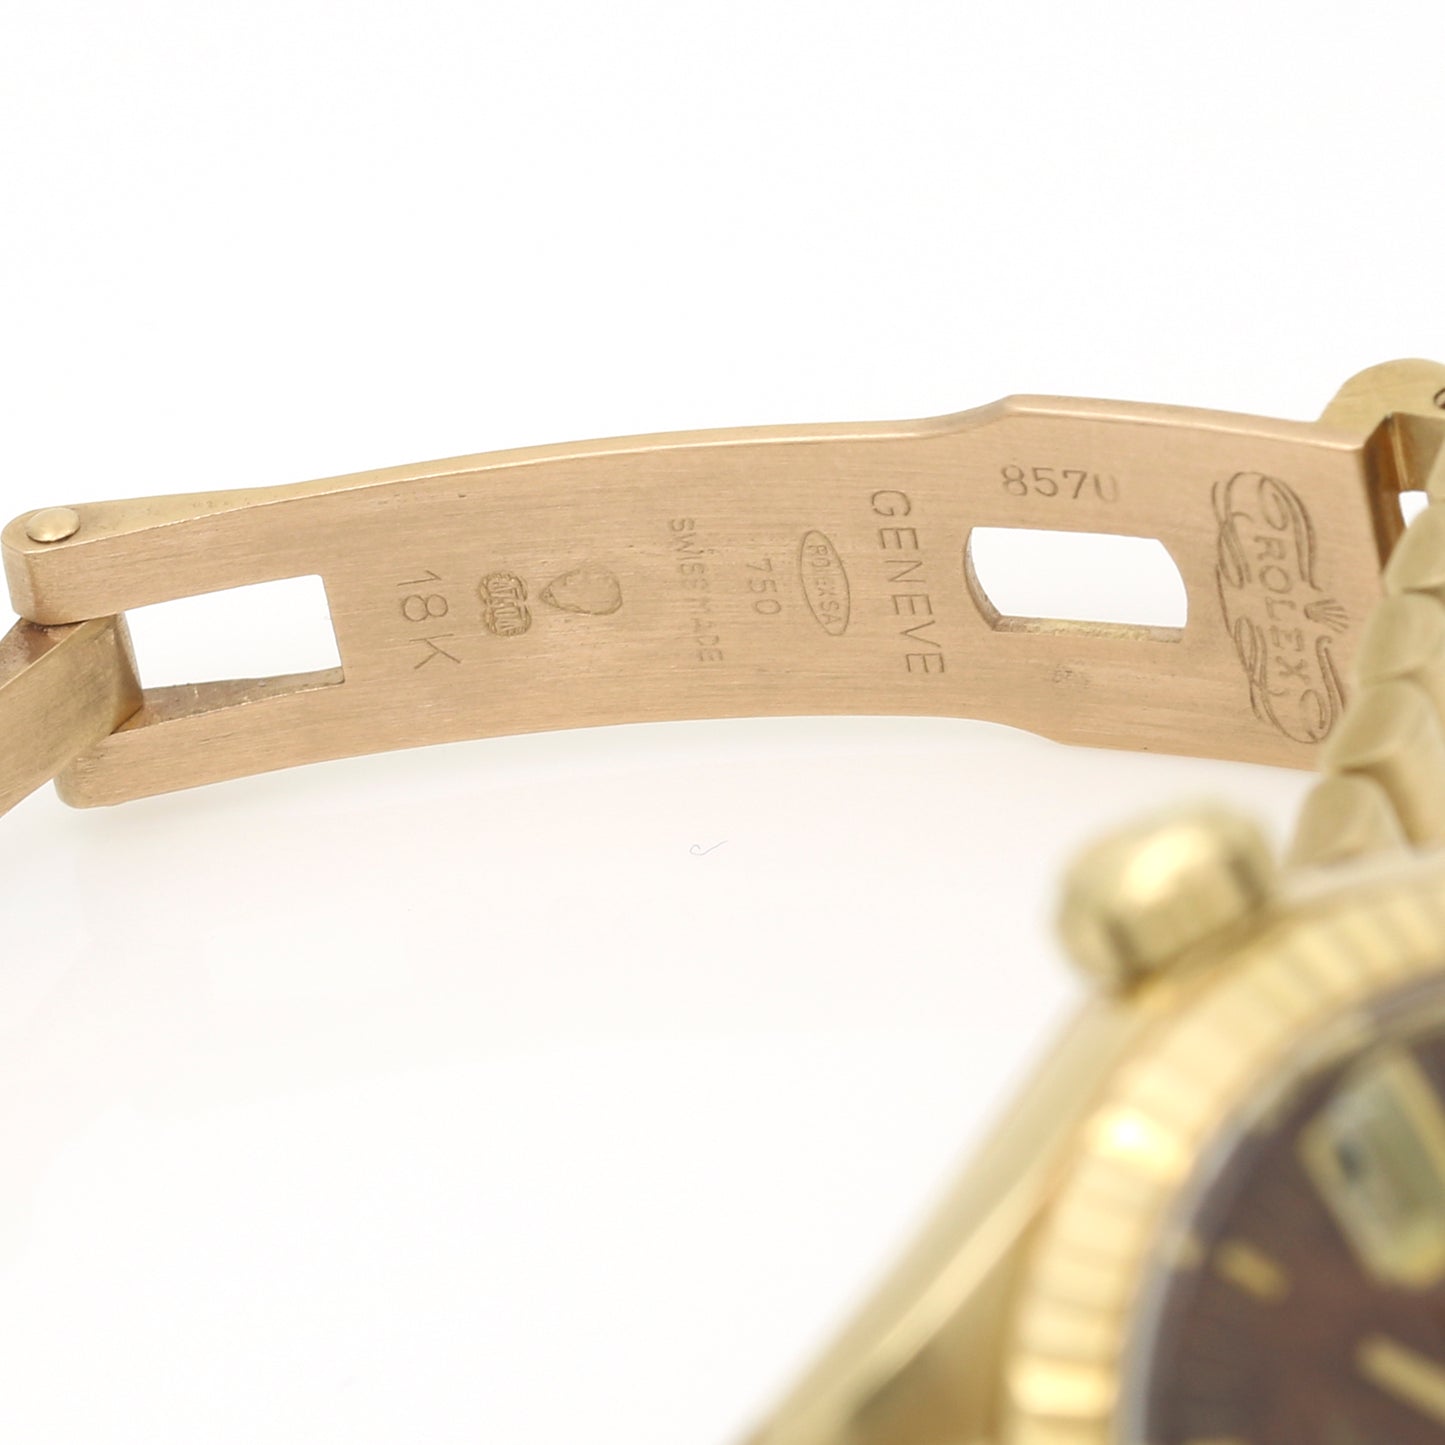 Rare Rolex President Lady Datejust 6917 18k Mahogany Wood Dial Watch - 26mm